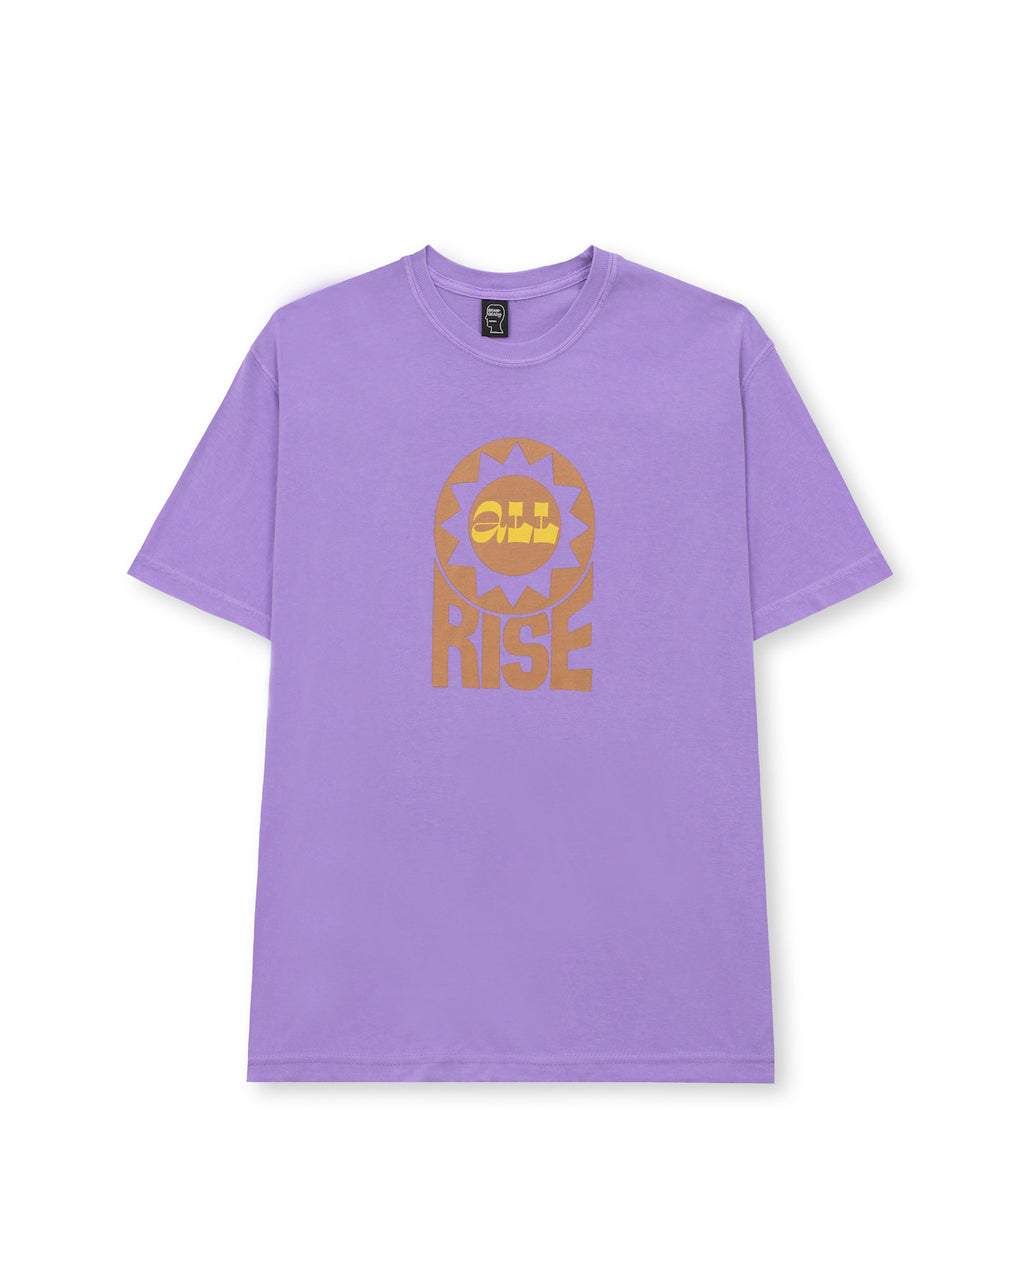 All Rise T-Shirt - Purple 1